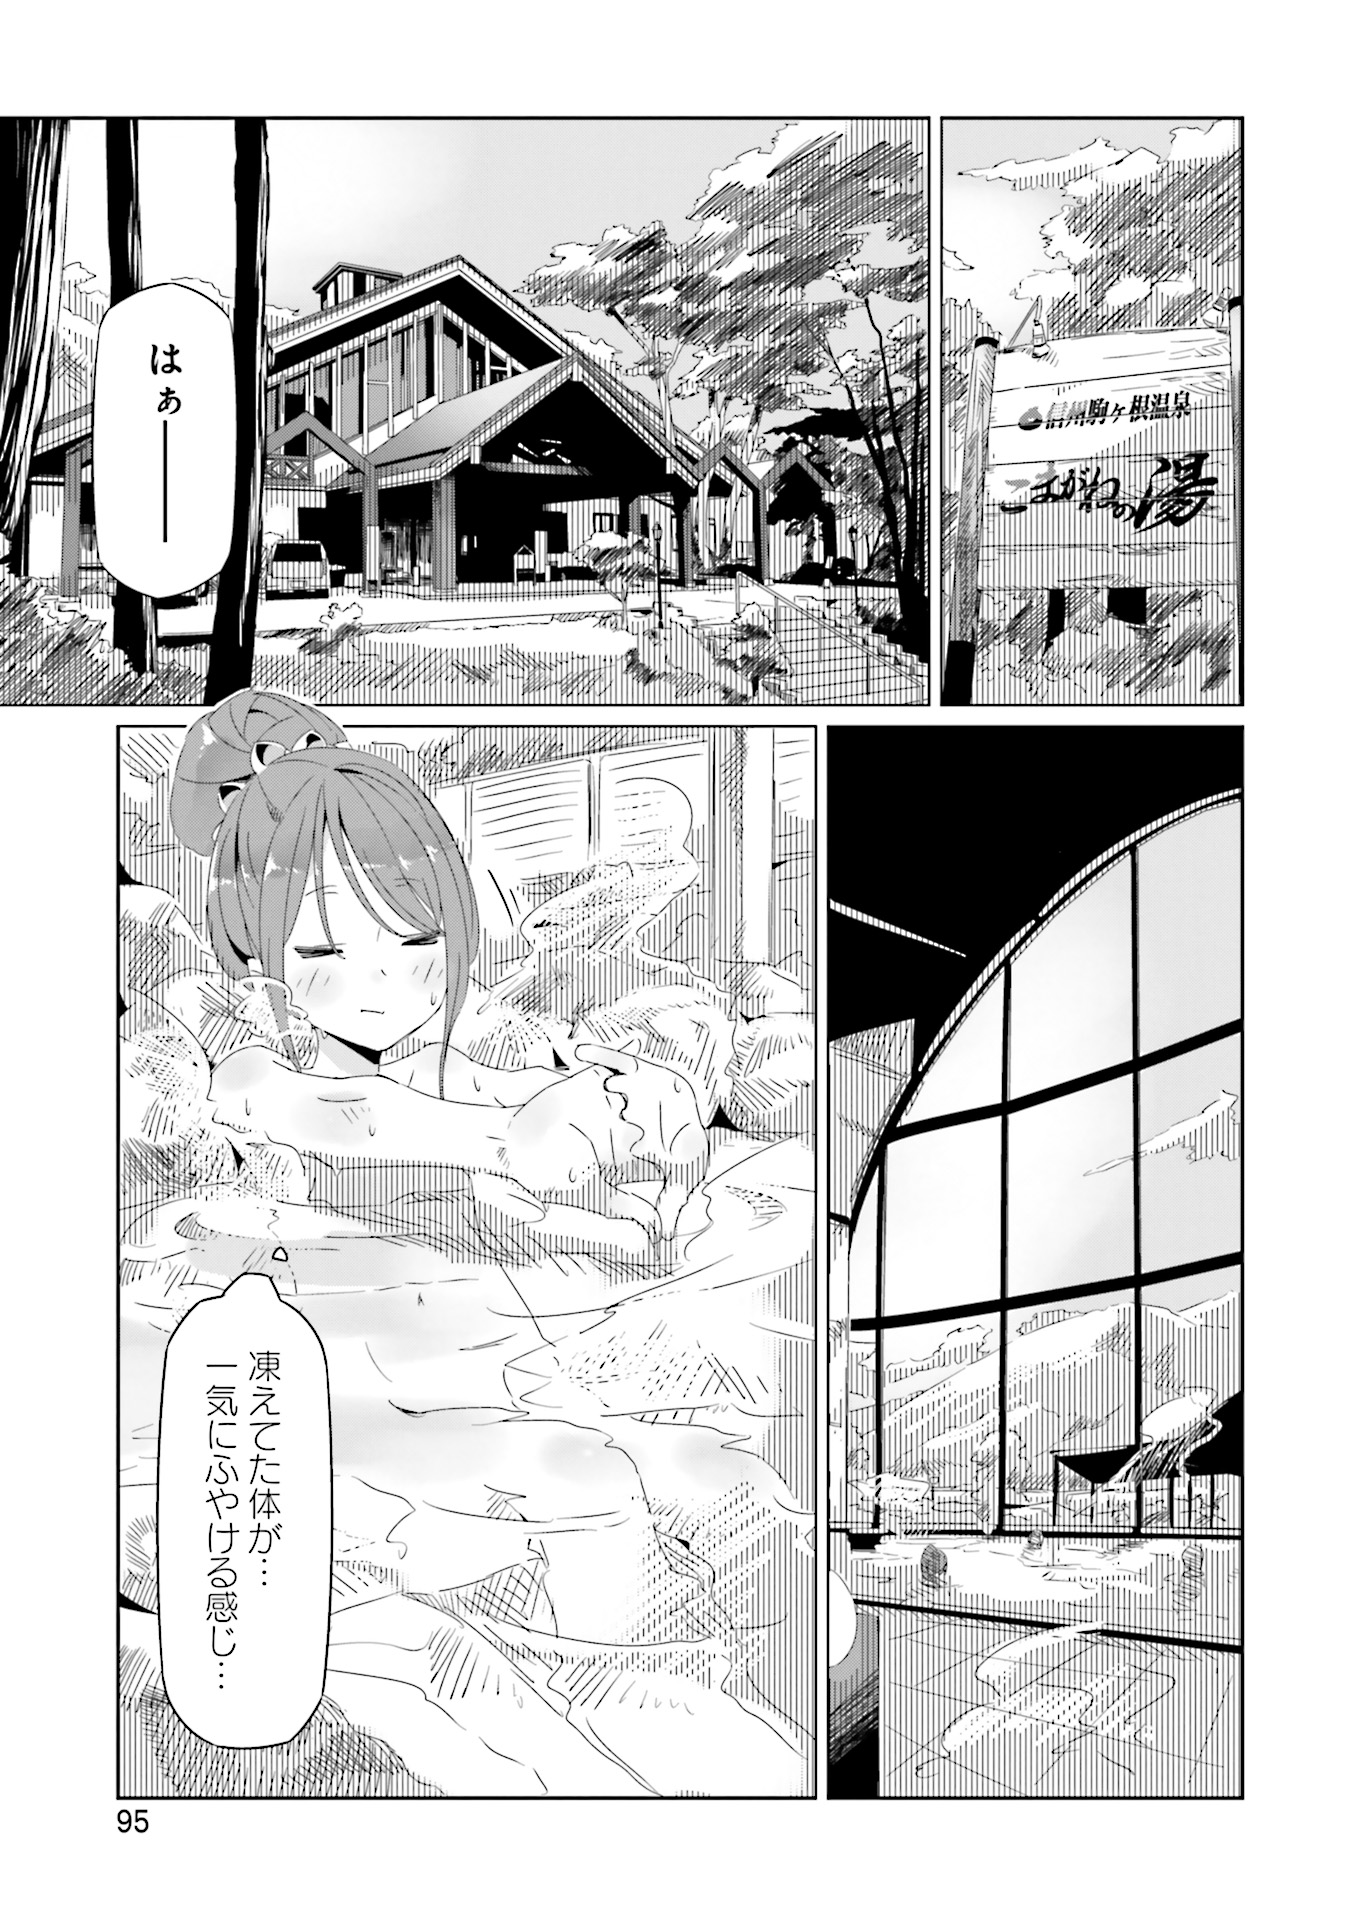 Yuru Camp - Chapter 17 - Page 3